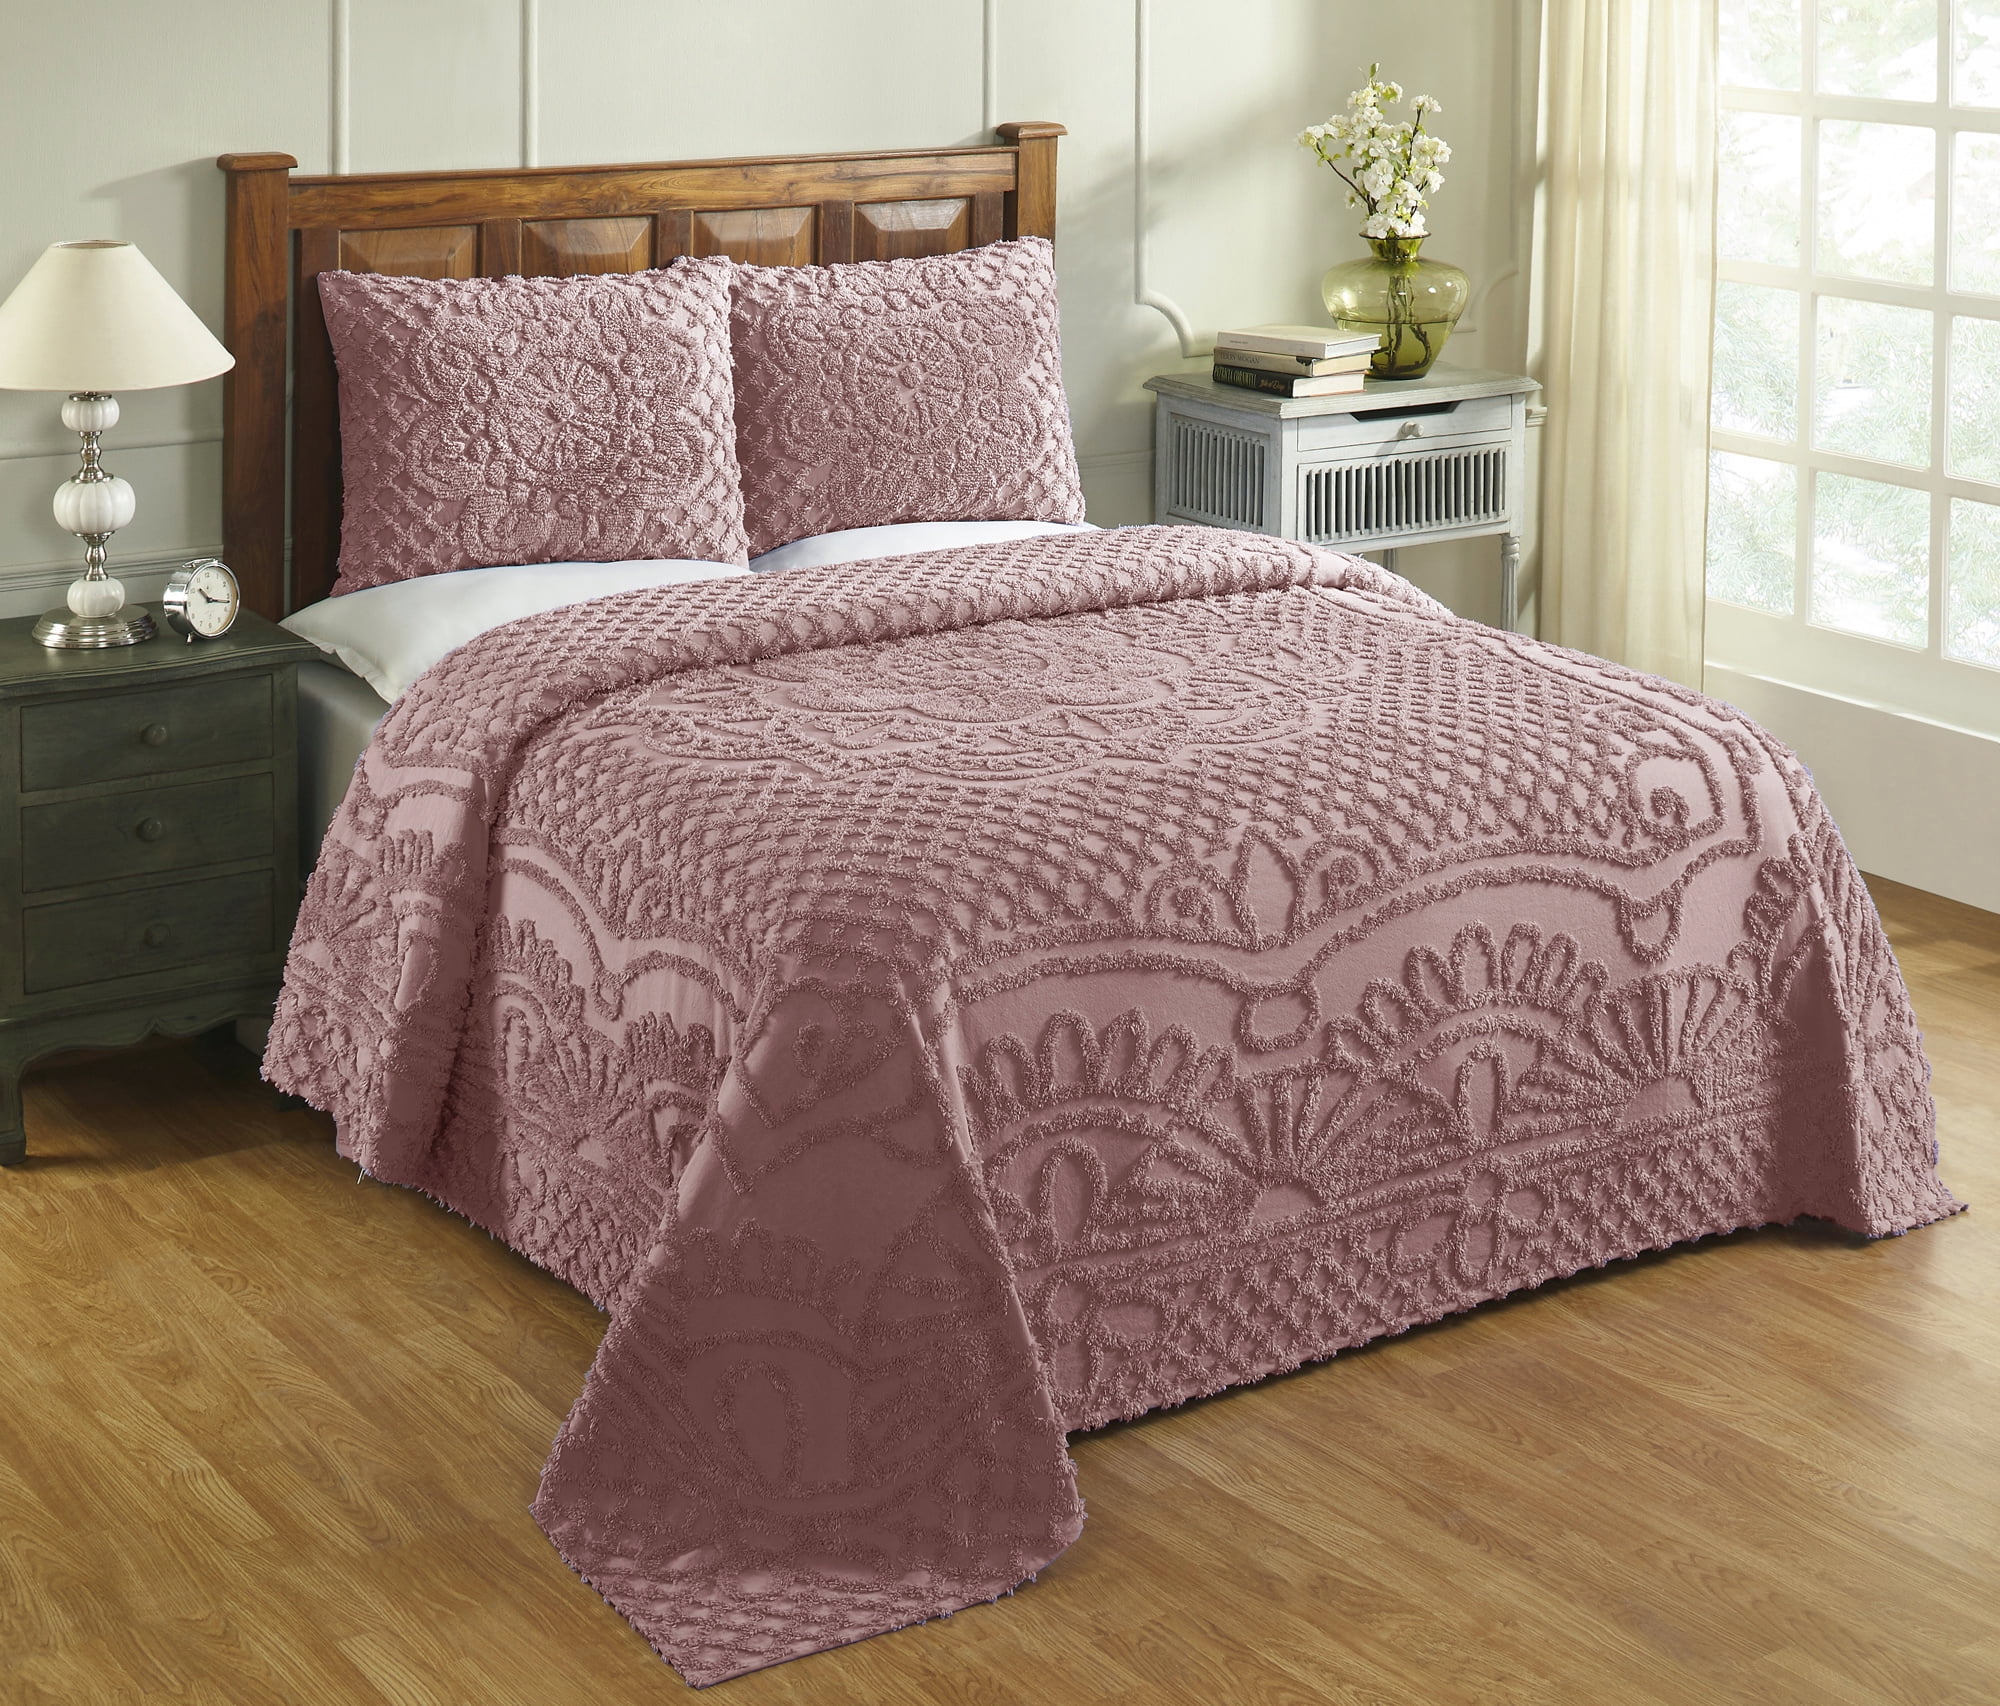 Better Trends Trevor Medallion Design, Full/Double Bedspread Set, 100% Cotton Tufted, Machine Washable, Pink